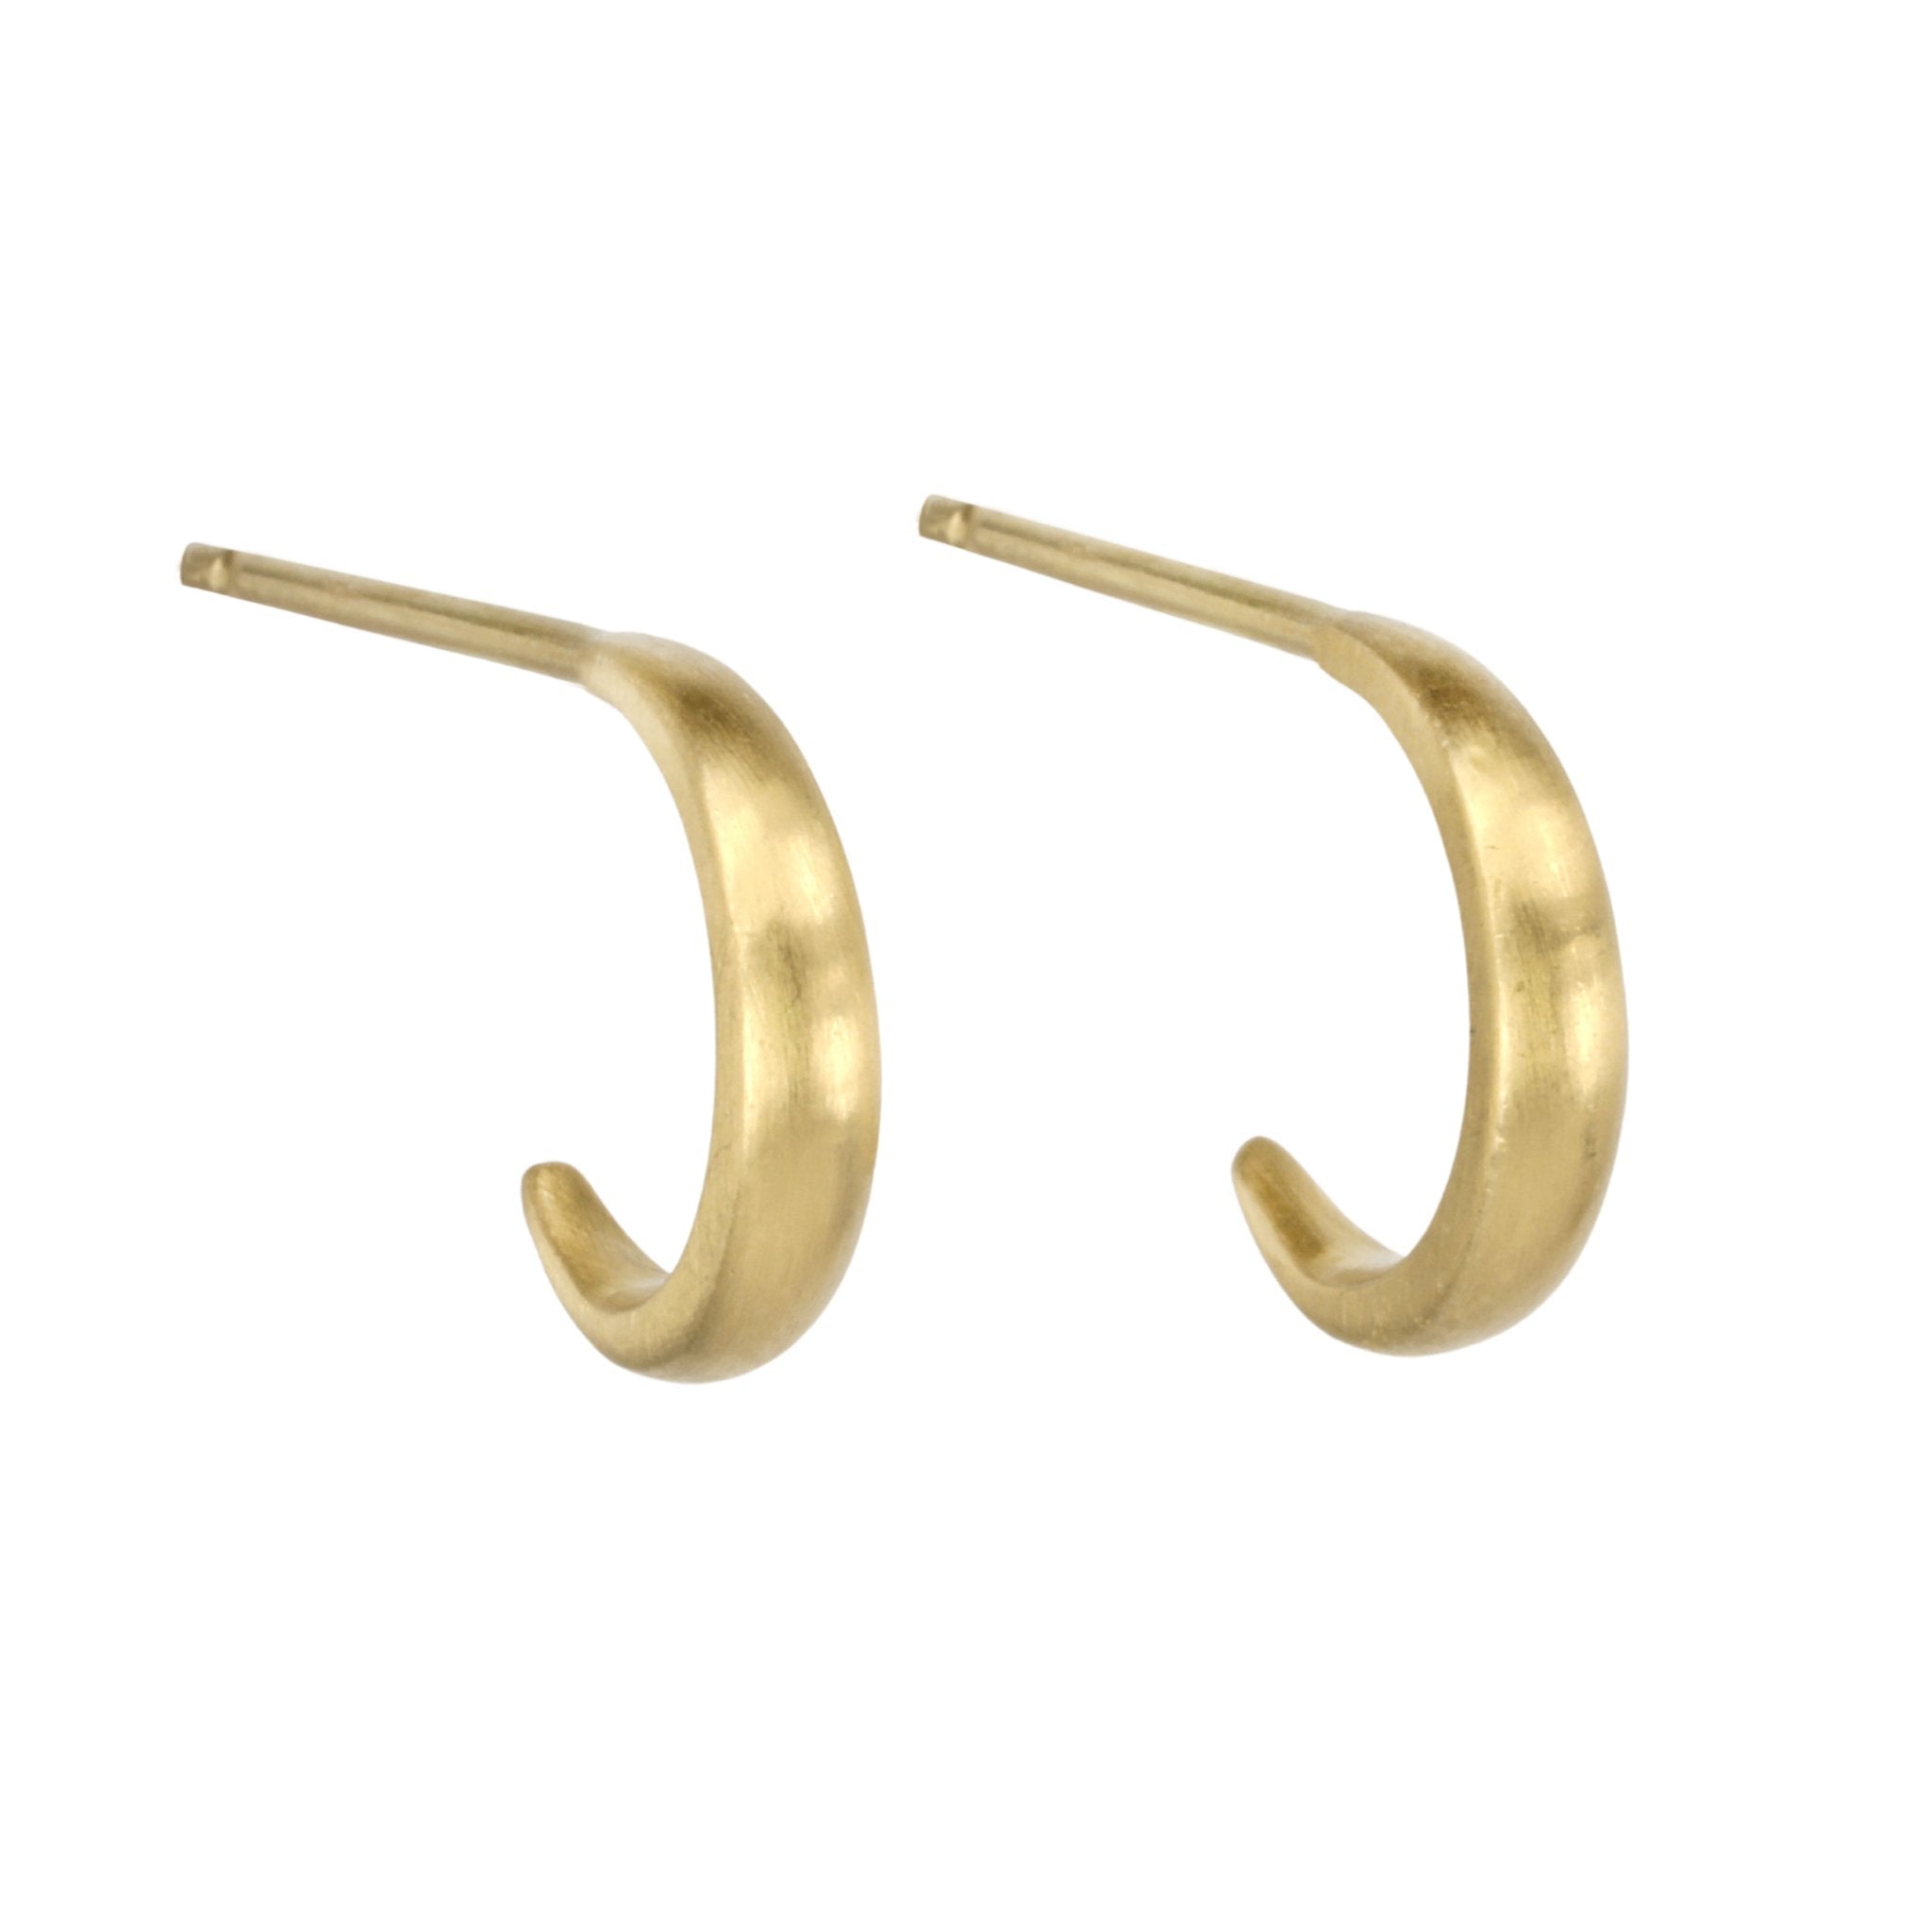 Small Gold Earrings, Tiny Gold Earring, Matte Gold, Little Top Earring, Small Simple Ear Hooks, Delicate Earring, 14K Solid Gold Hook Option 14K Solid